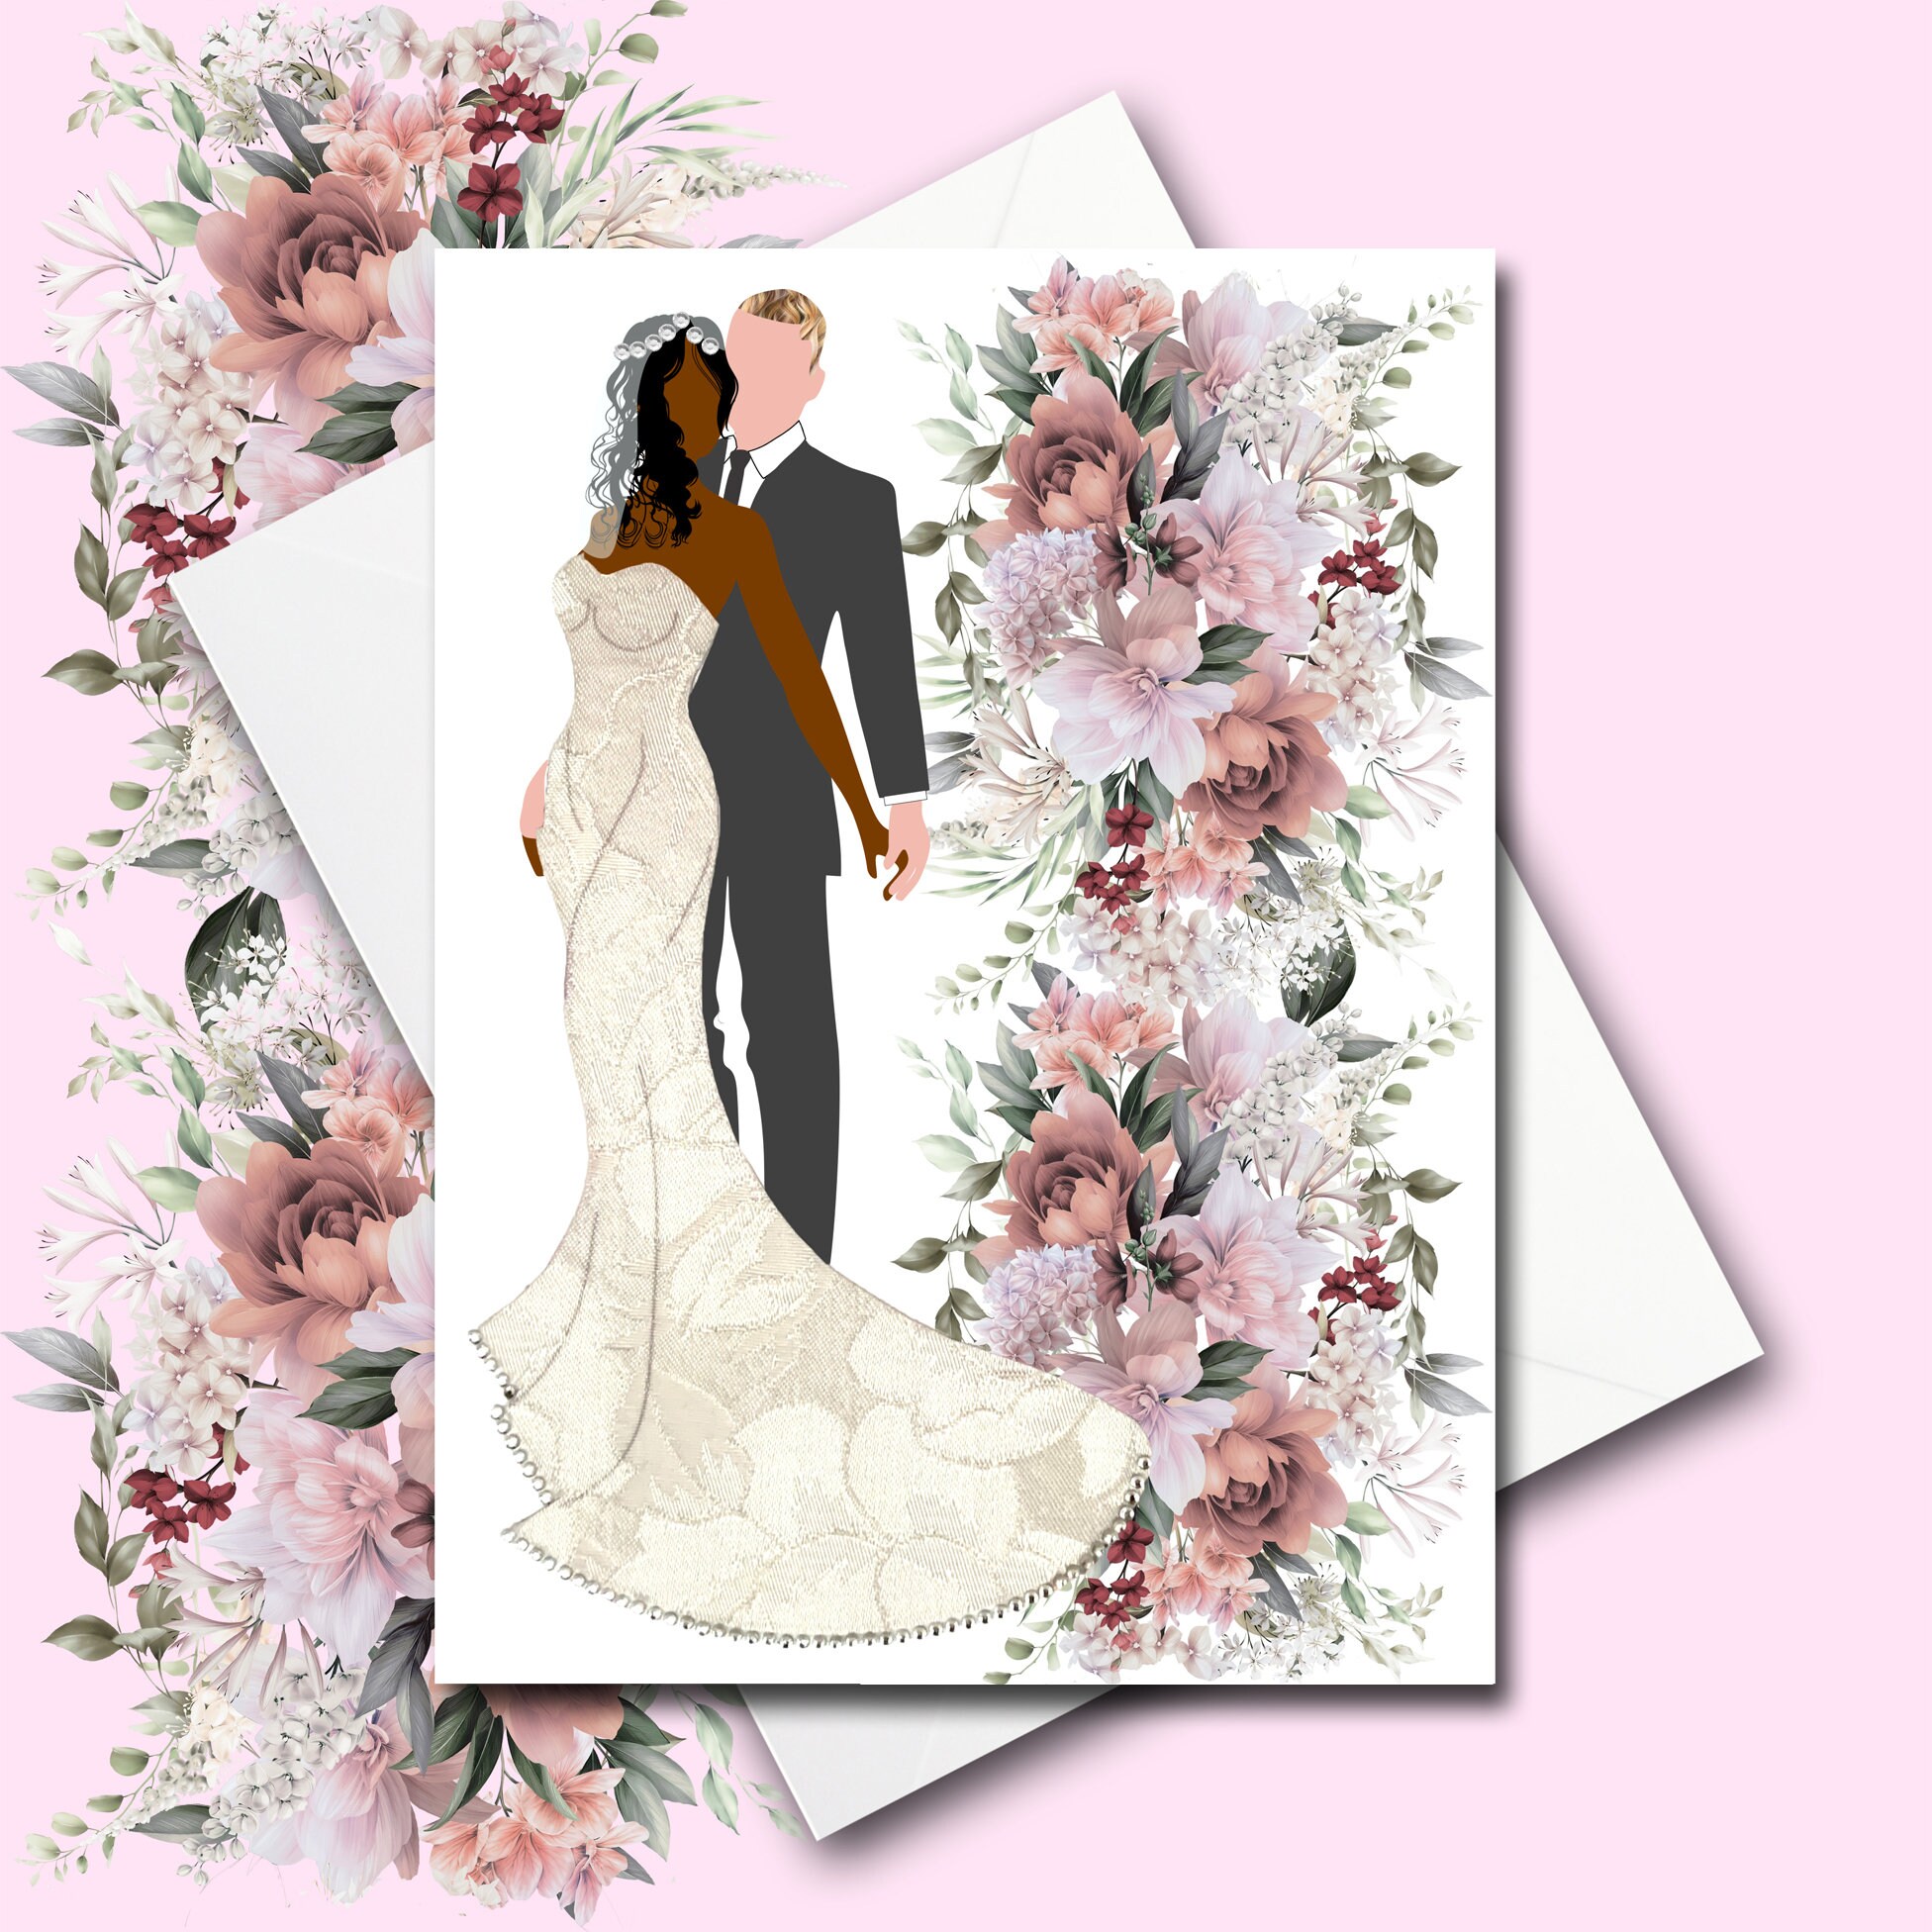 Interracial Couple Floral Wedding Card White Man Black Woman